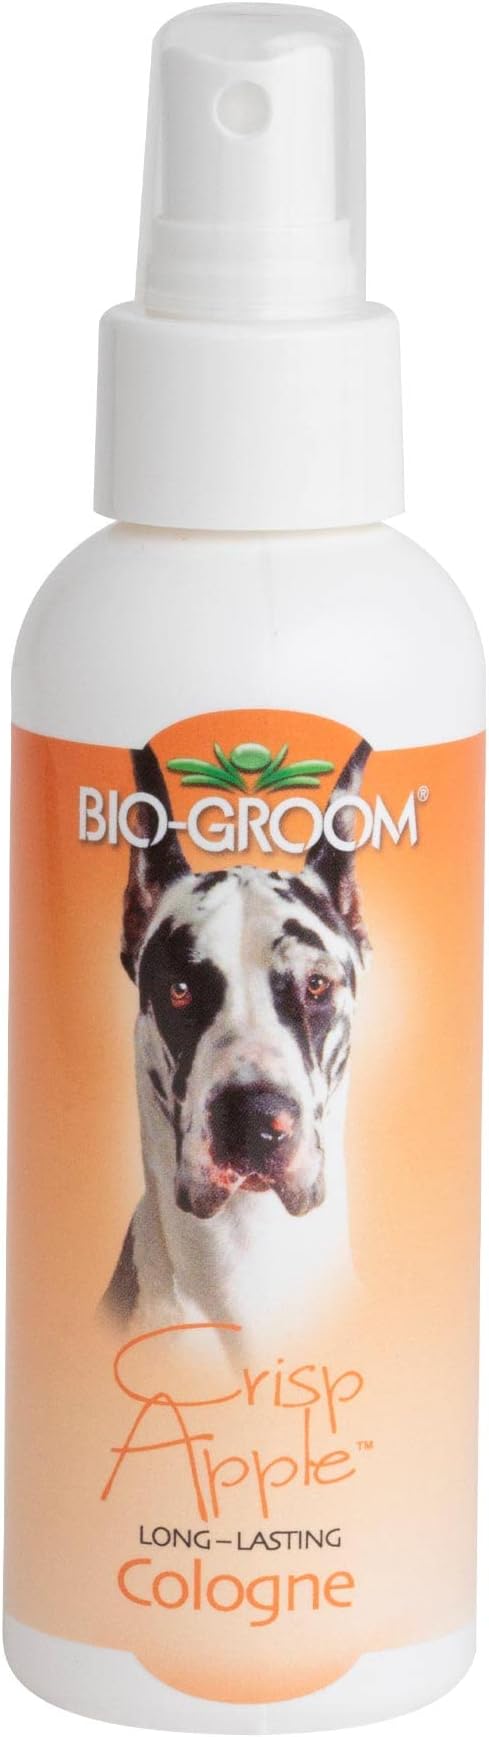 Bio-Groom Crisp Apple Vegan & Cruelty-free Long Lasting Dog Cologne Spray 118ml